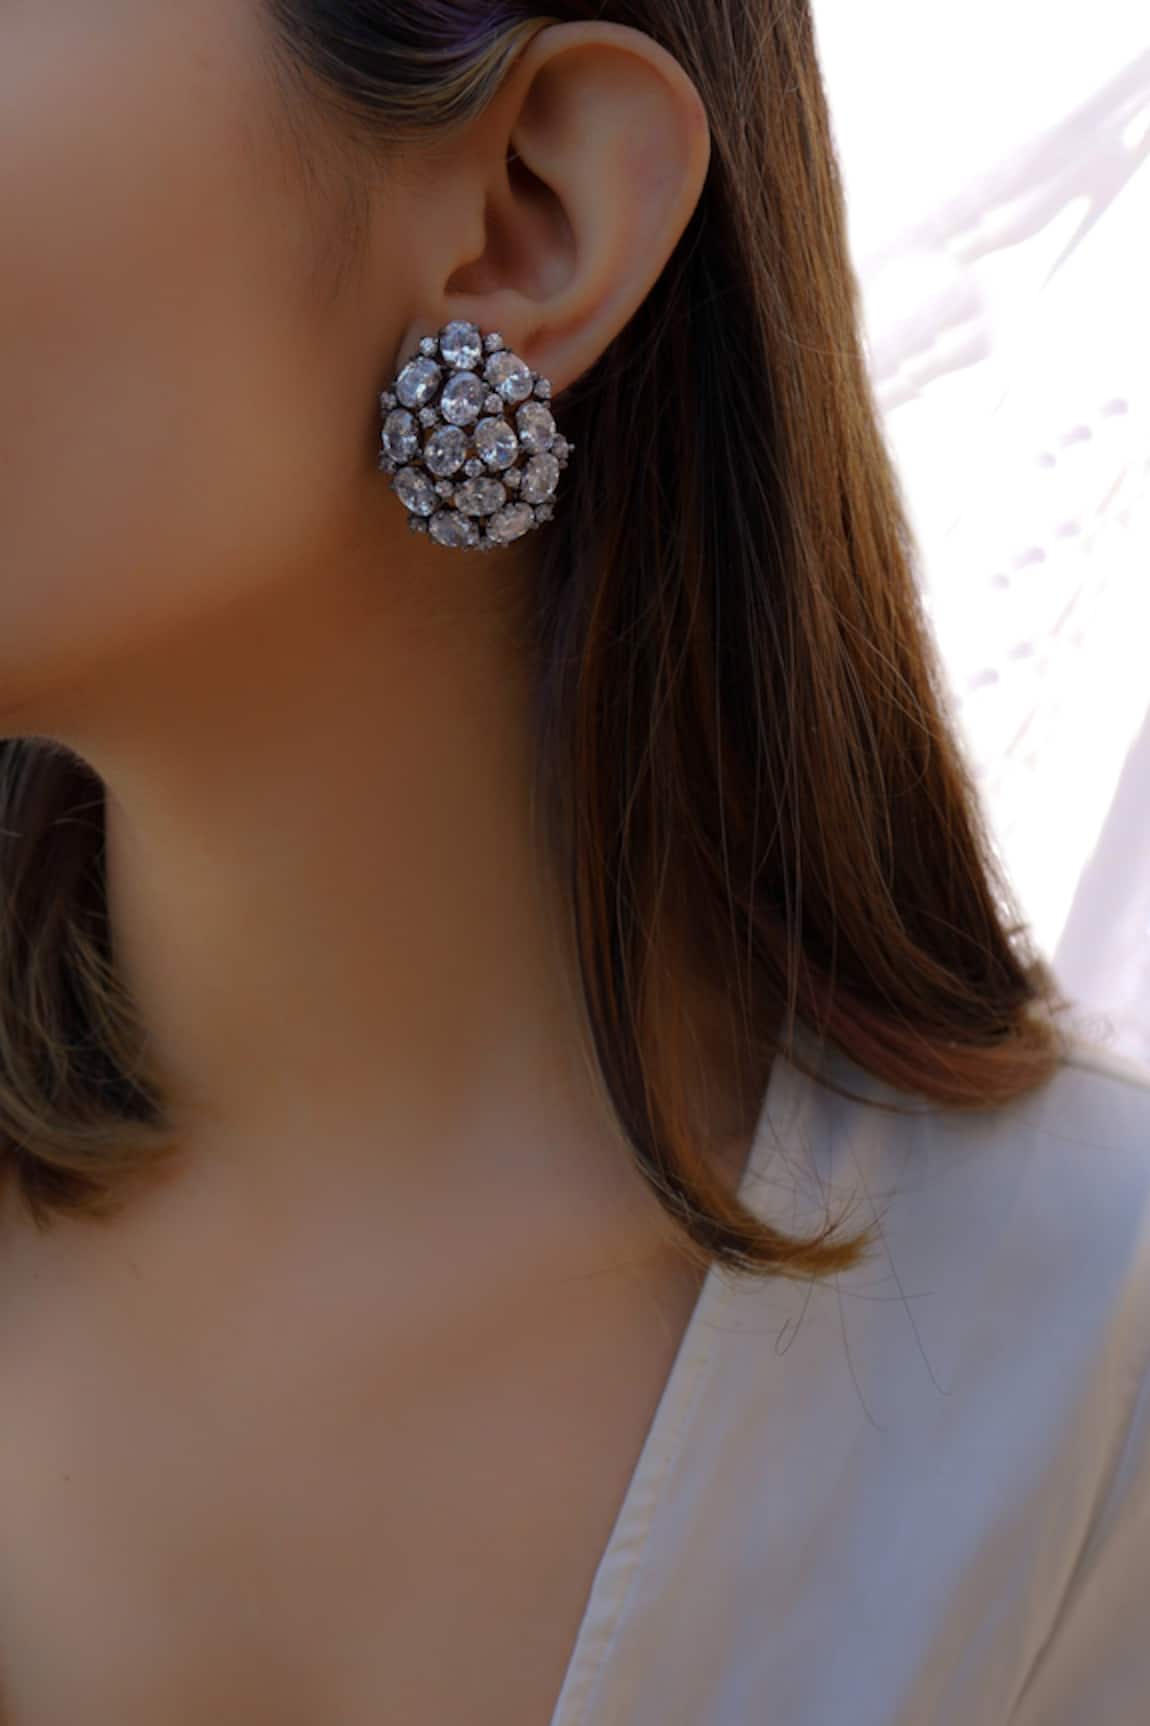 Buy Crystal Stud Earrings Stainless Steel Post and Screwback Online in  India  Etsy